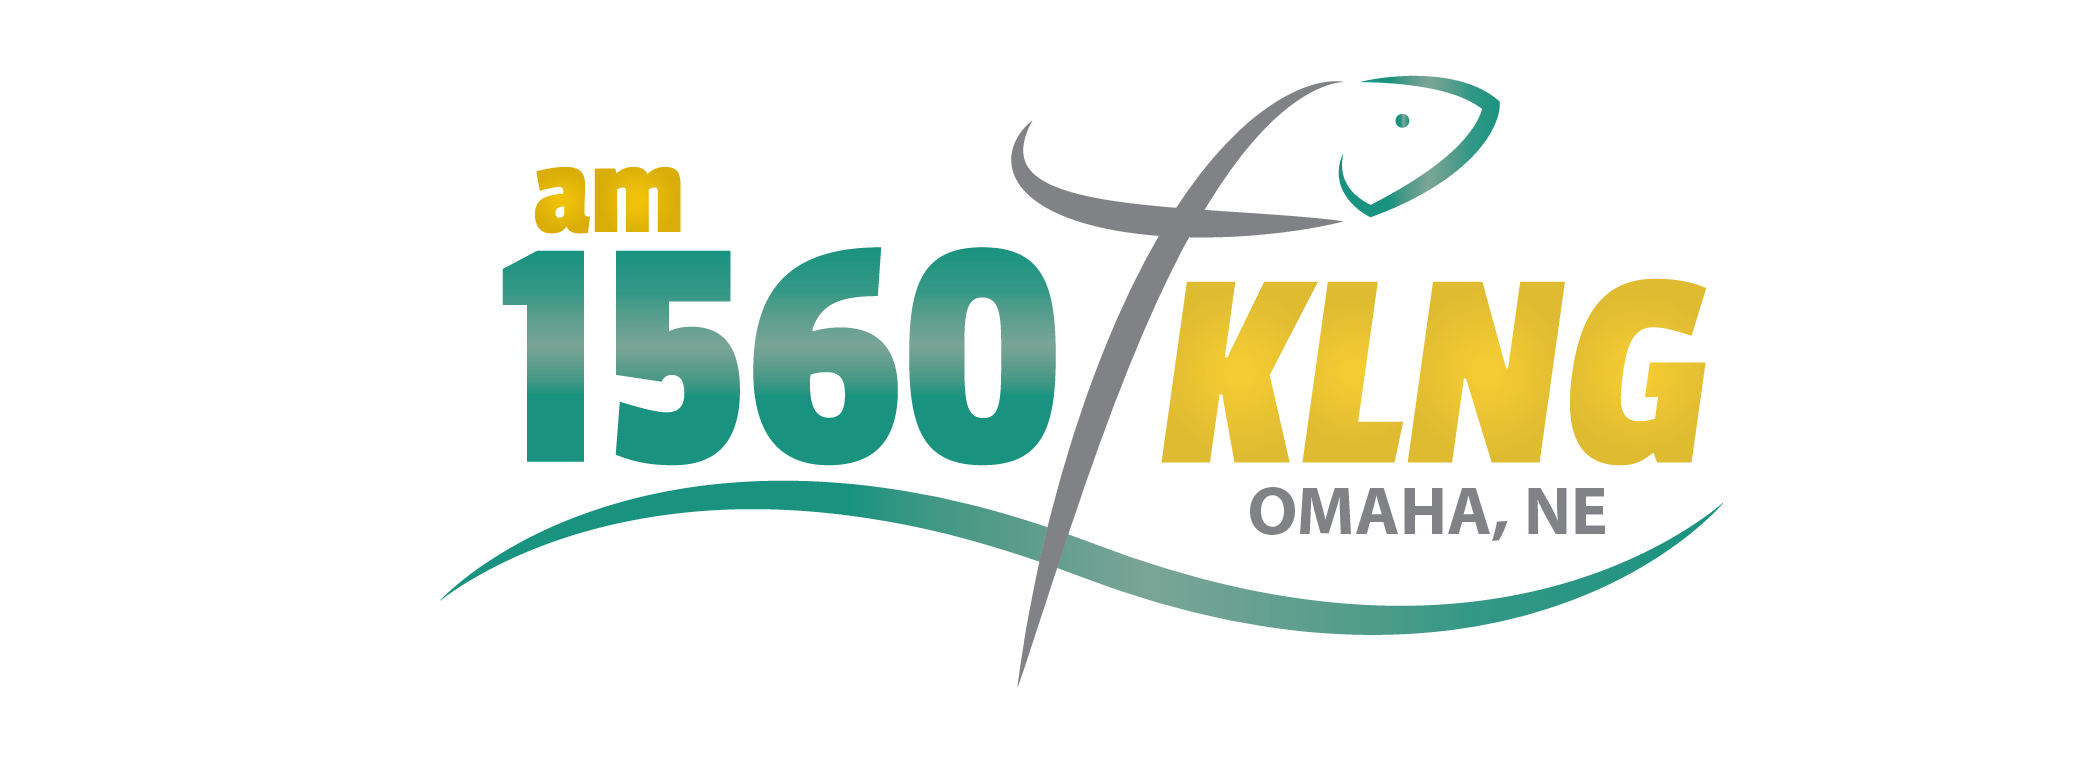 KLNG Radio In Omaha Joins DSS Family